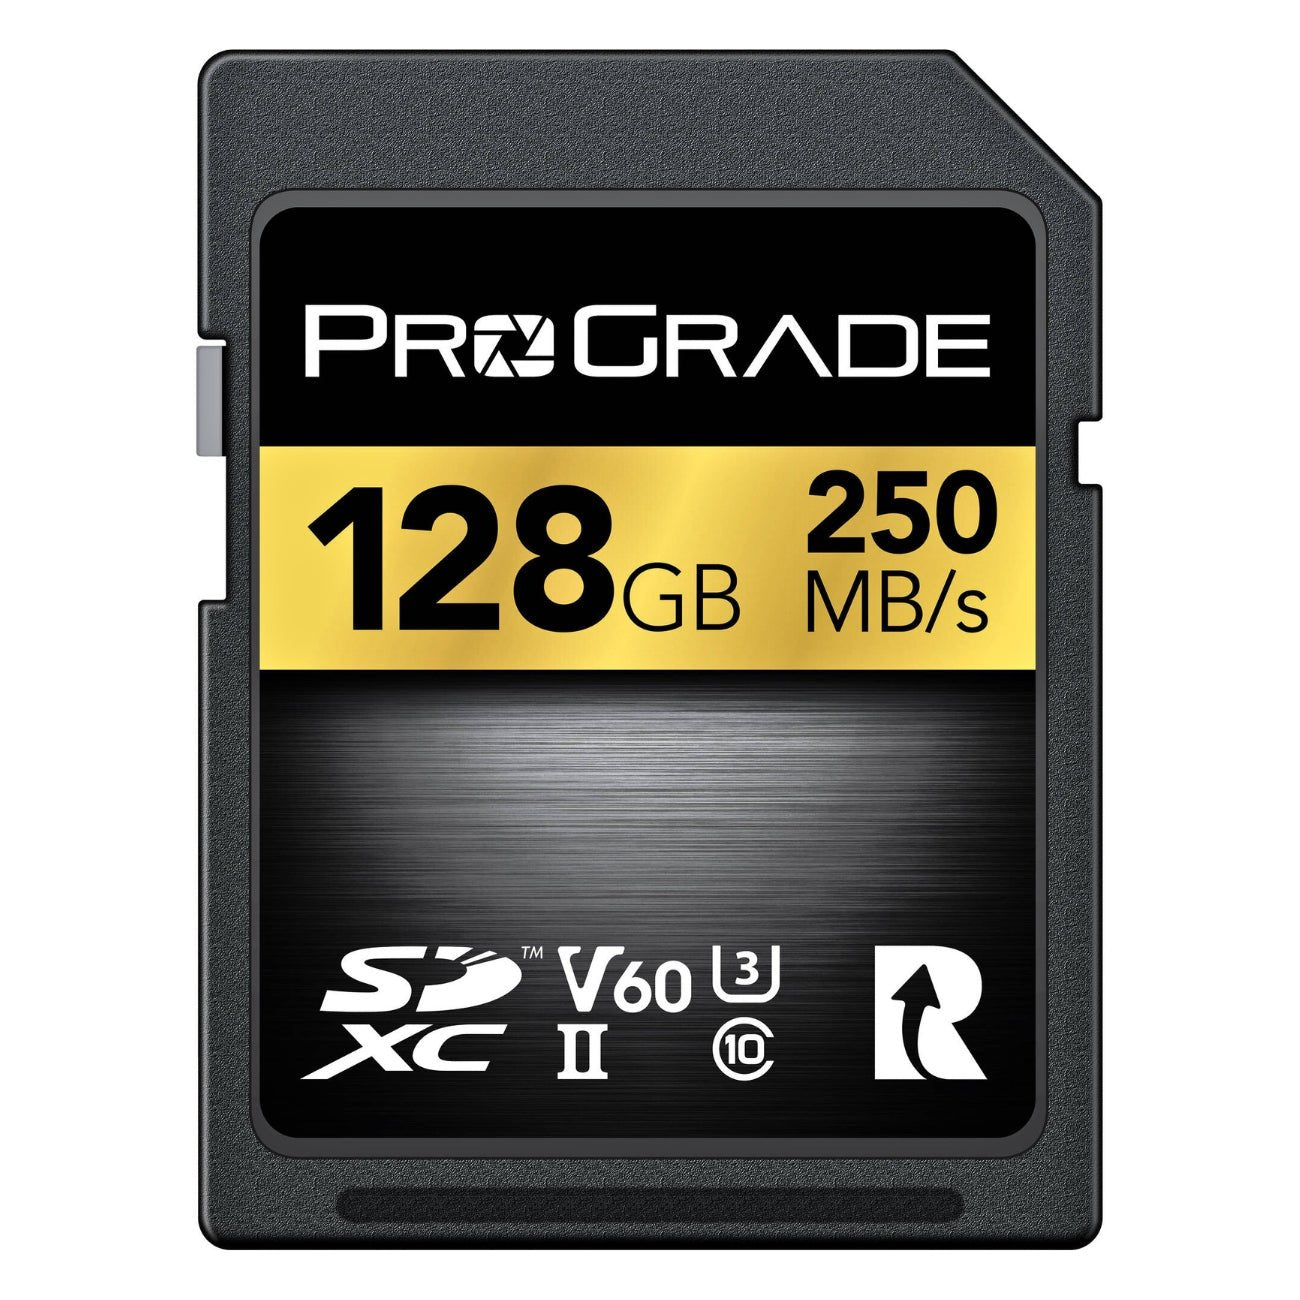 ProGrade Digital SDXC UHS-II V60 250R Memory Card - 128GB / sdxc memory card 128gb